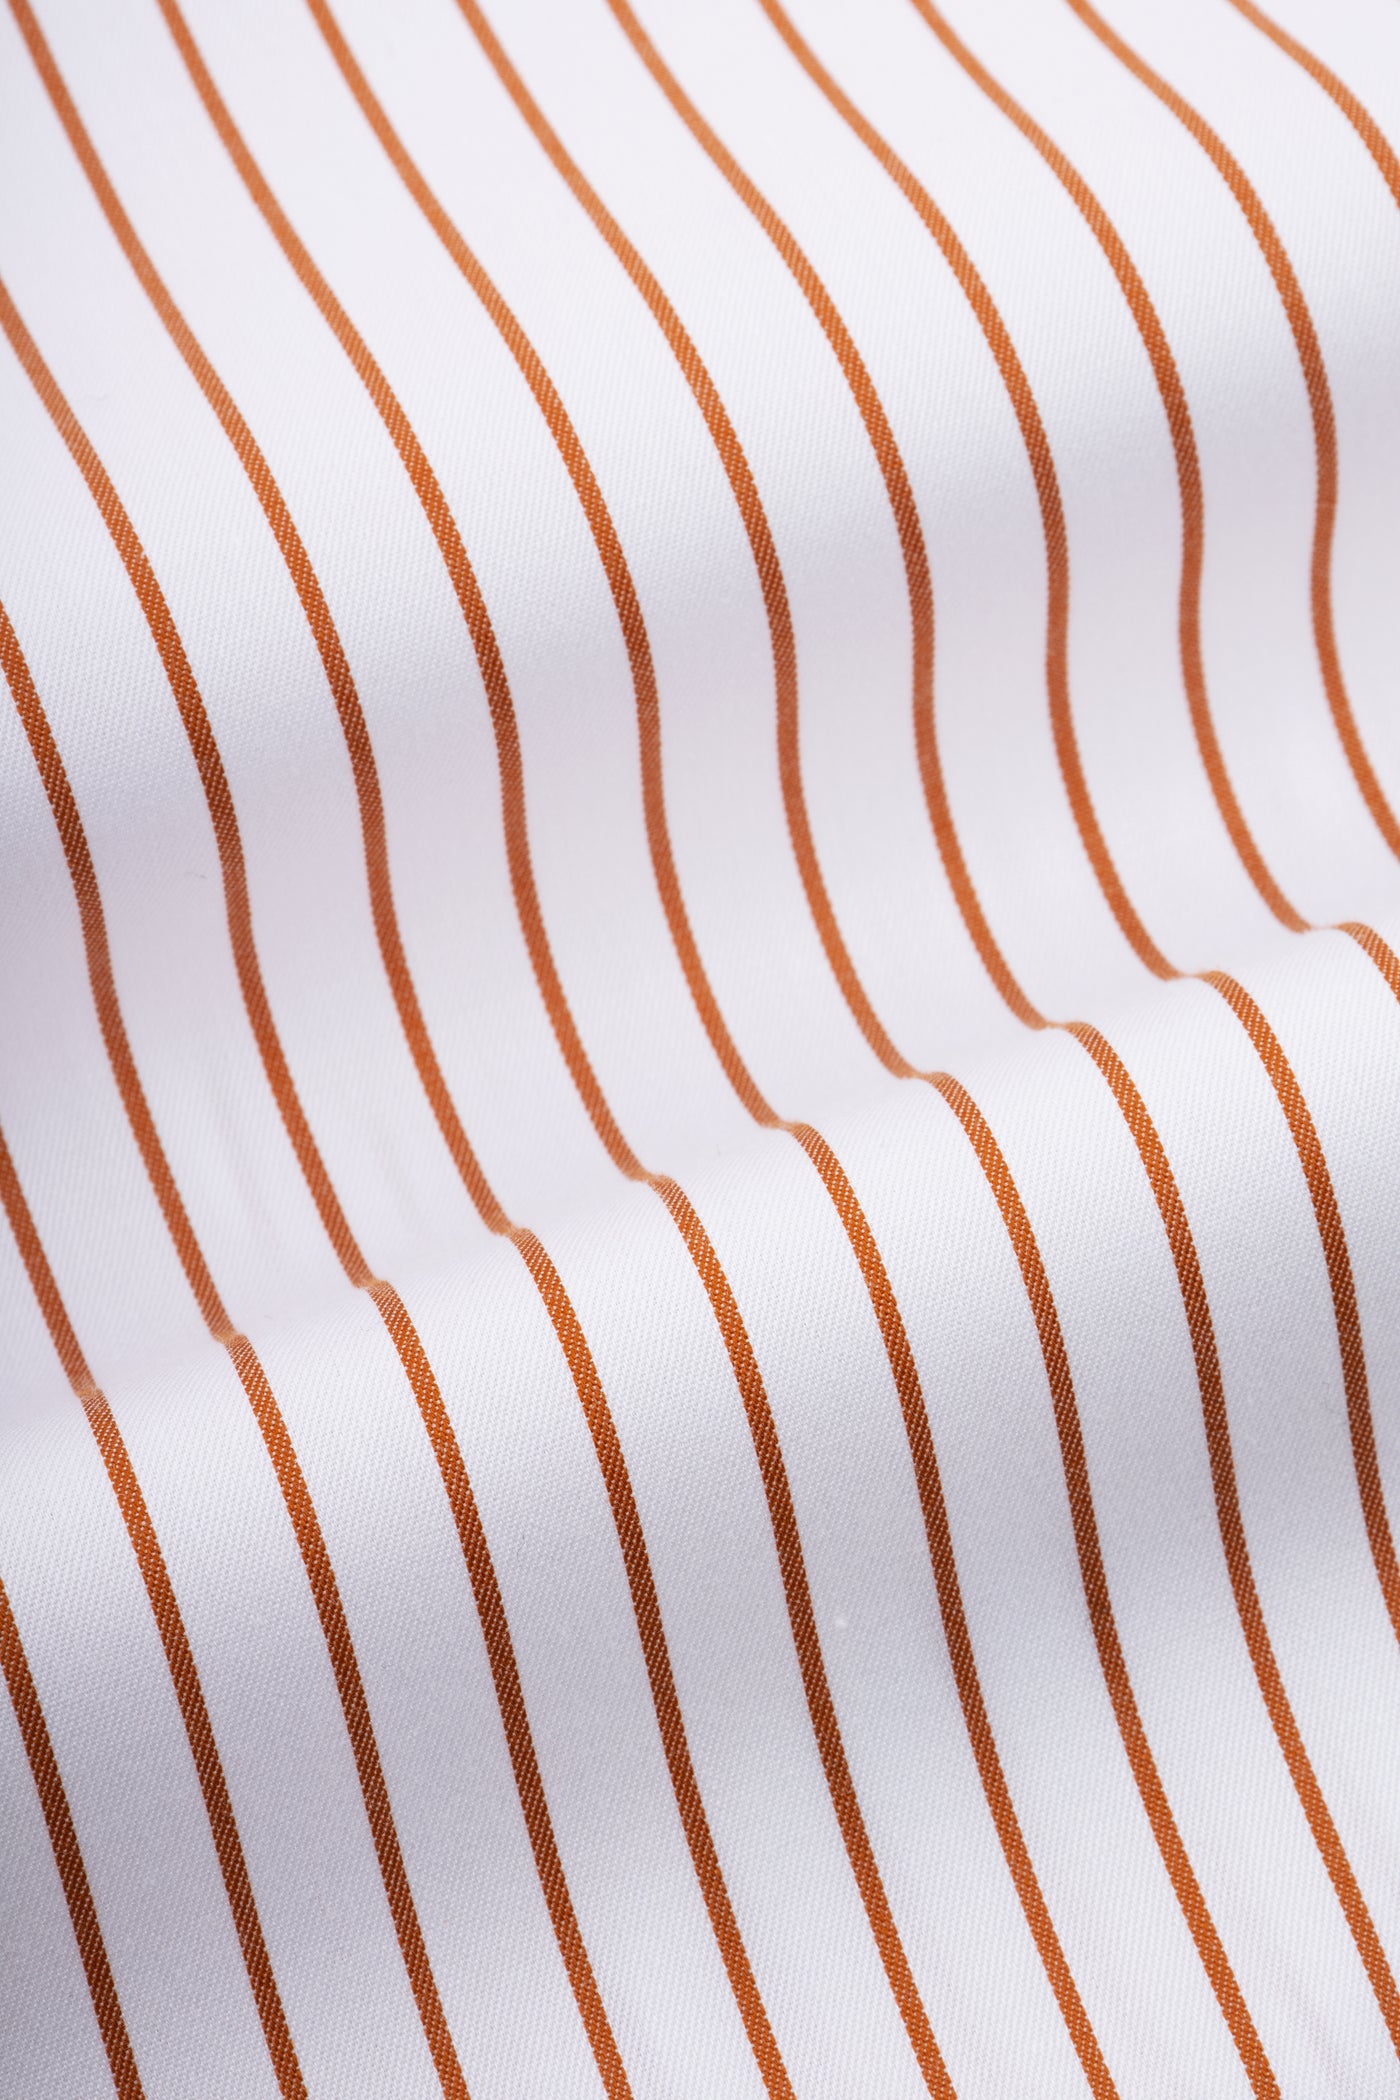 Striped White & Orange Smart Casual Shirt